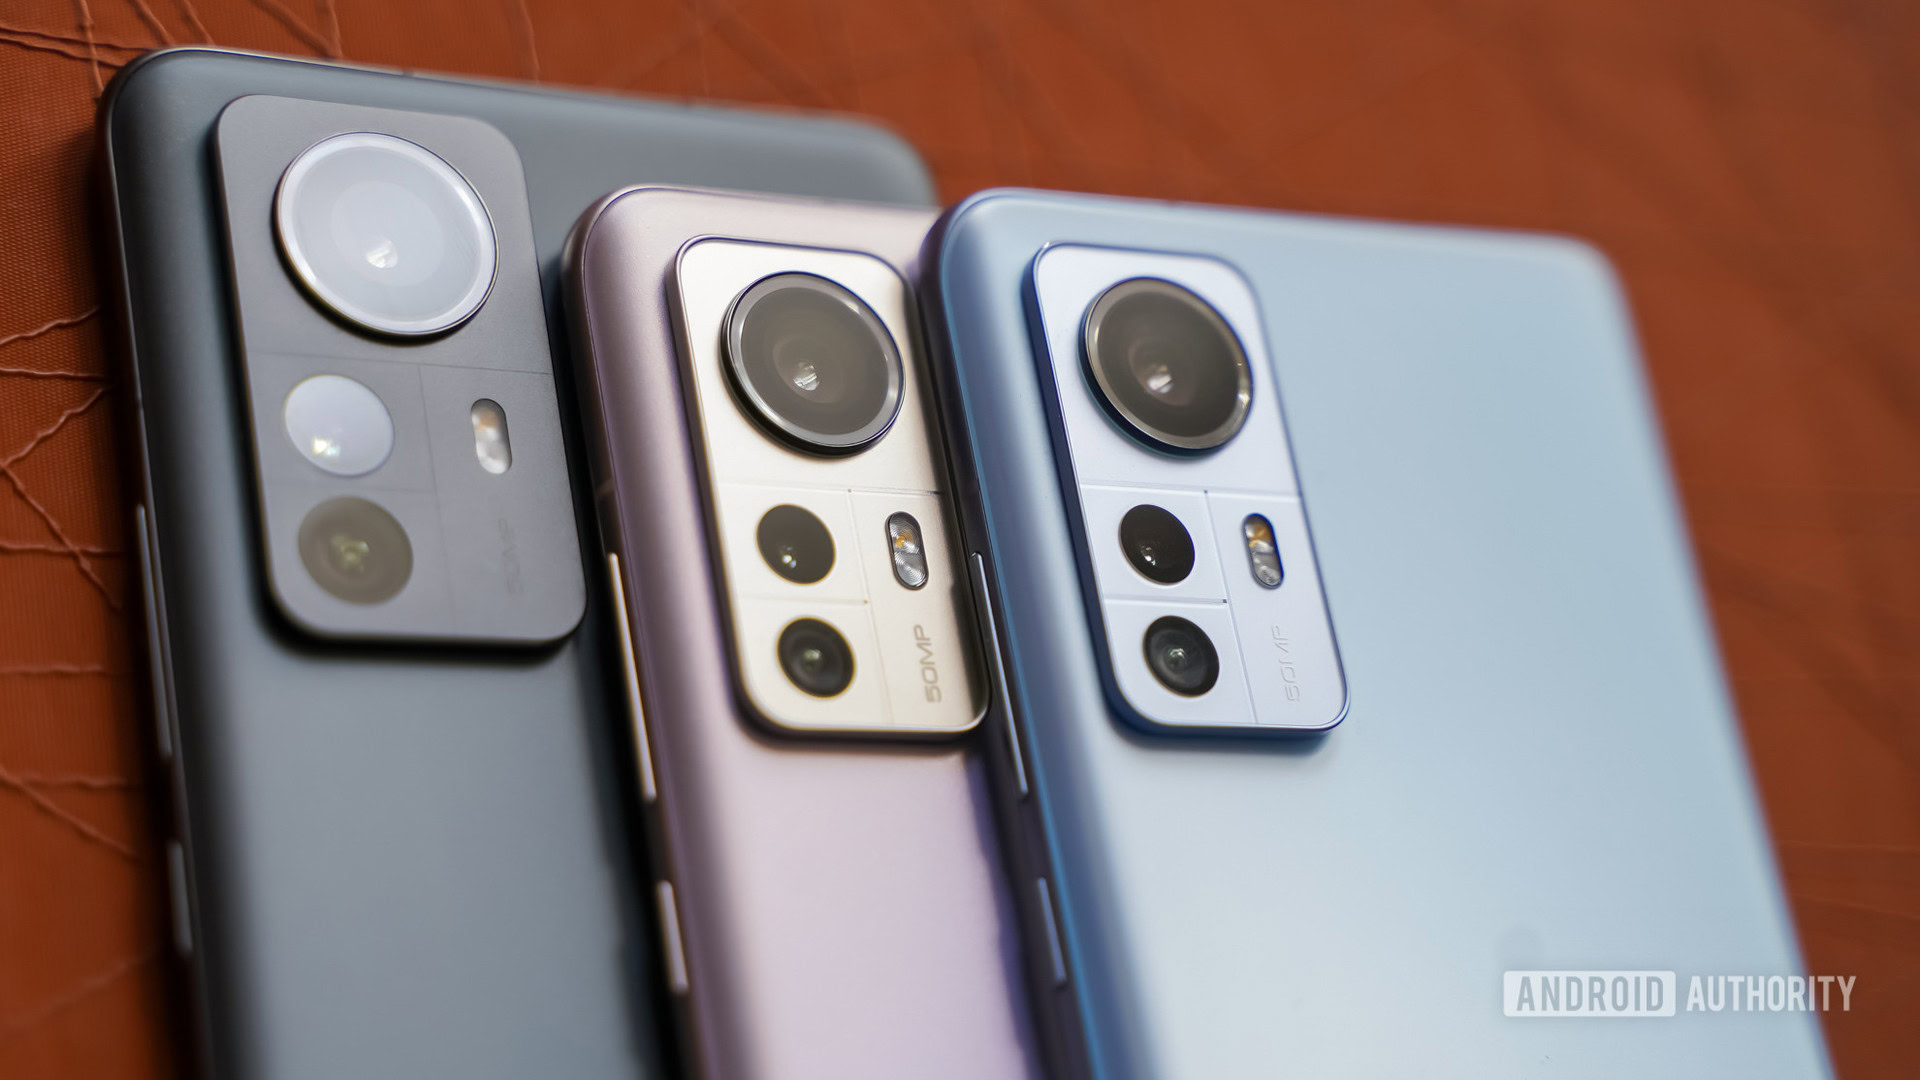 Xiaomi 12 series rear view showing camera modules — best Snapdragon 8 Gen 1 phones.